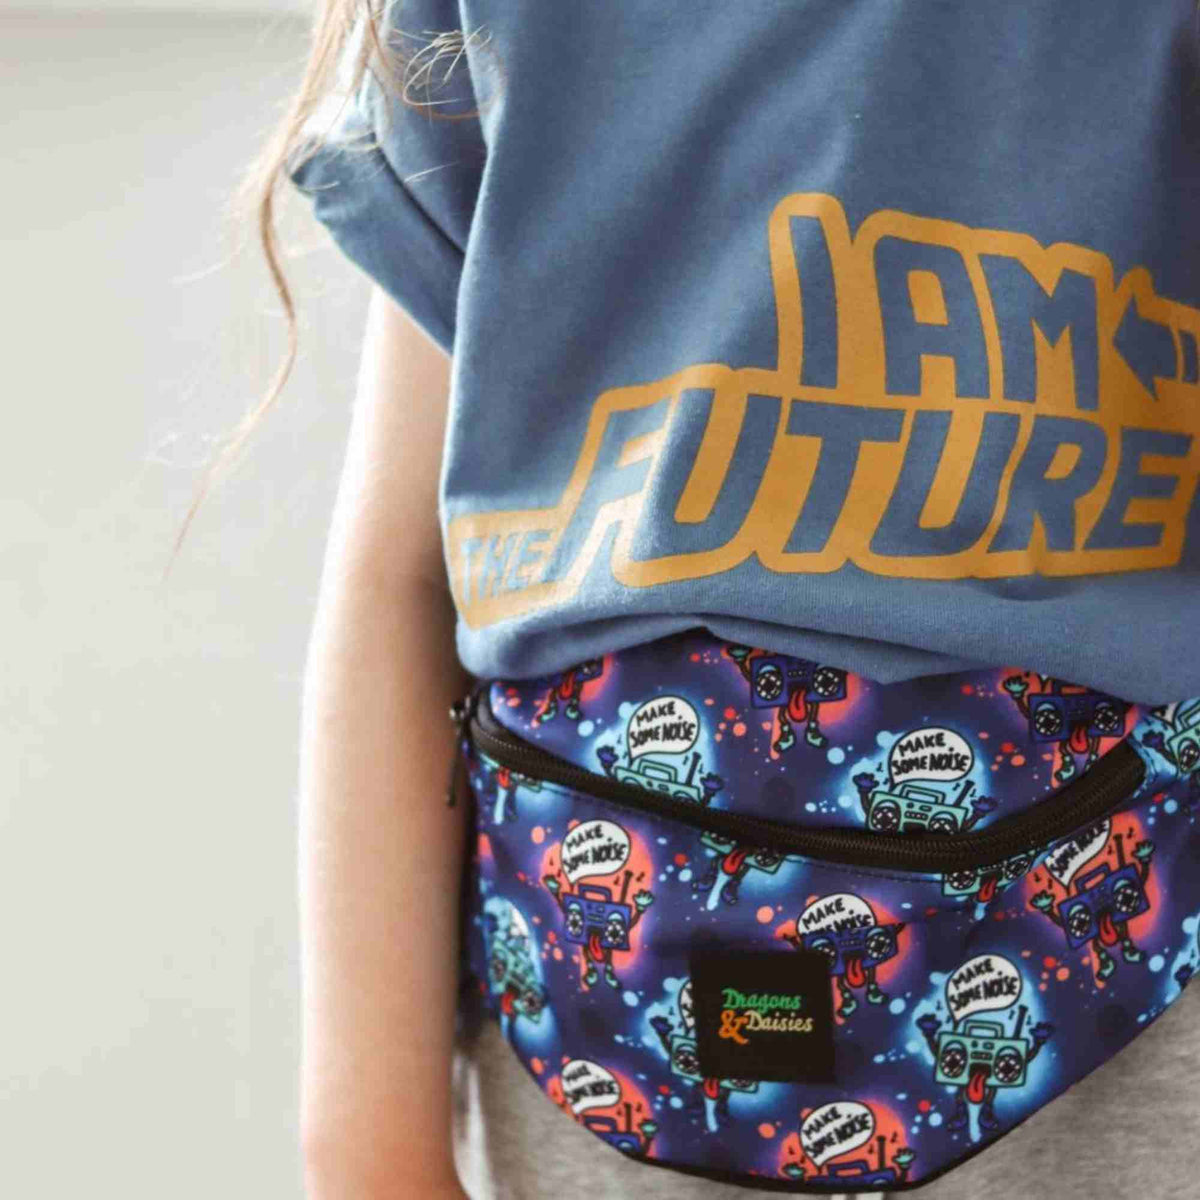 I Am The Future Unisex Kids T-Shirt